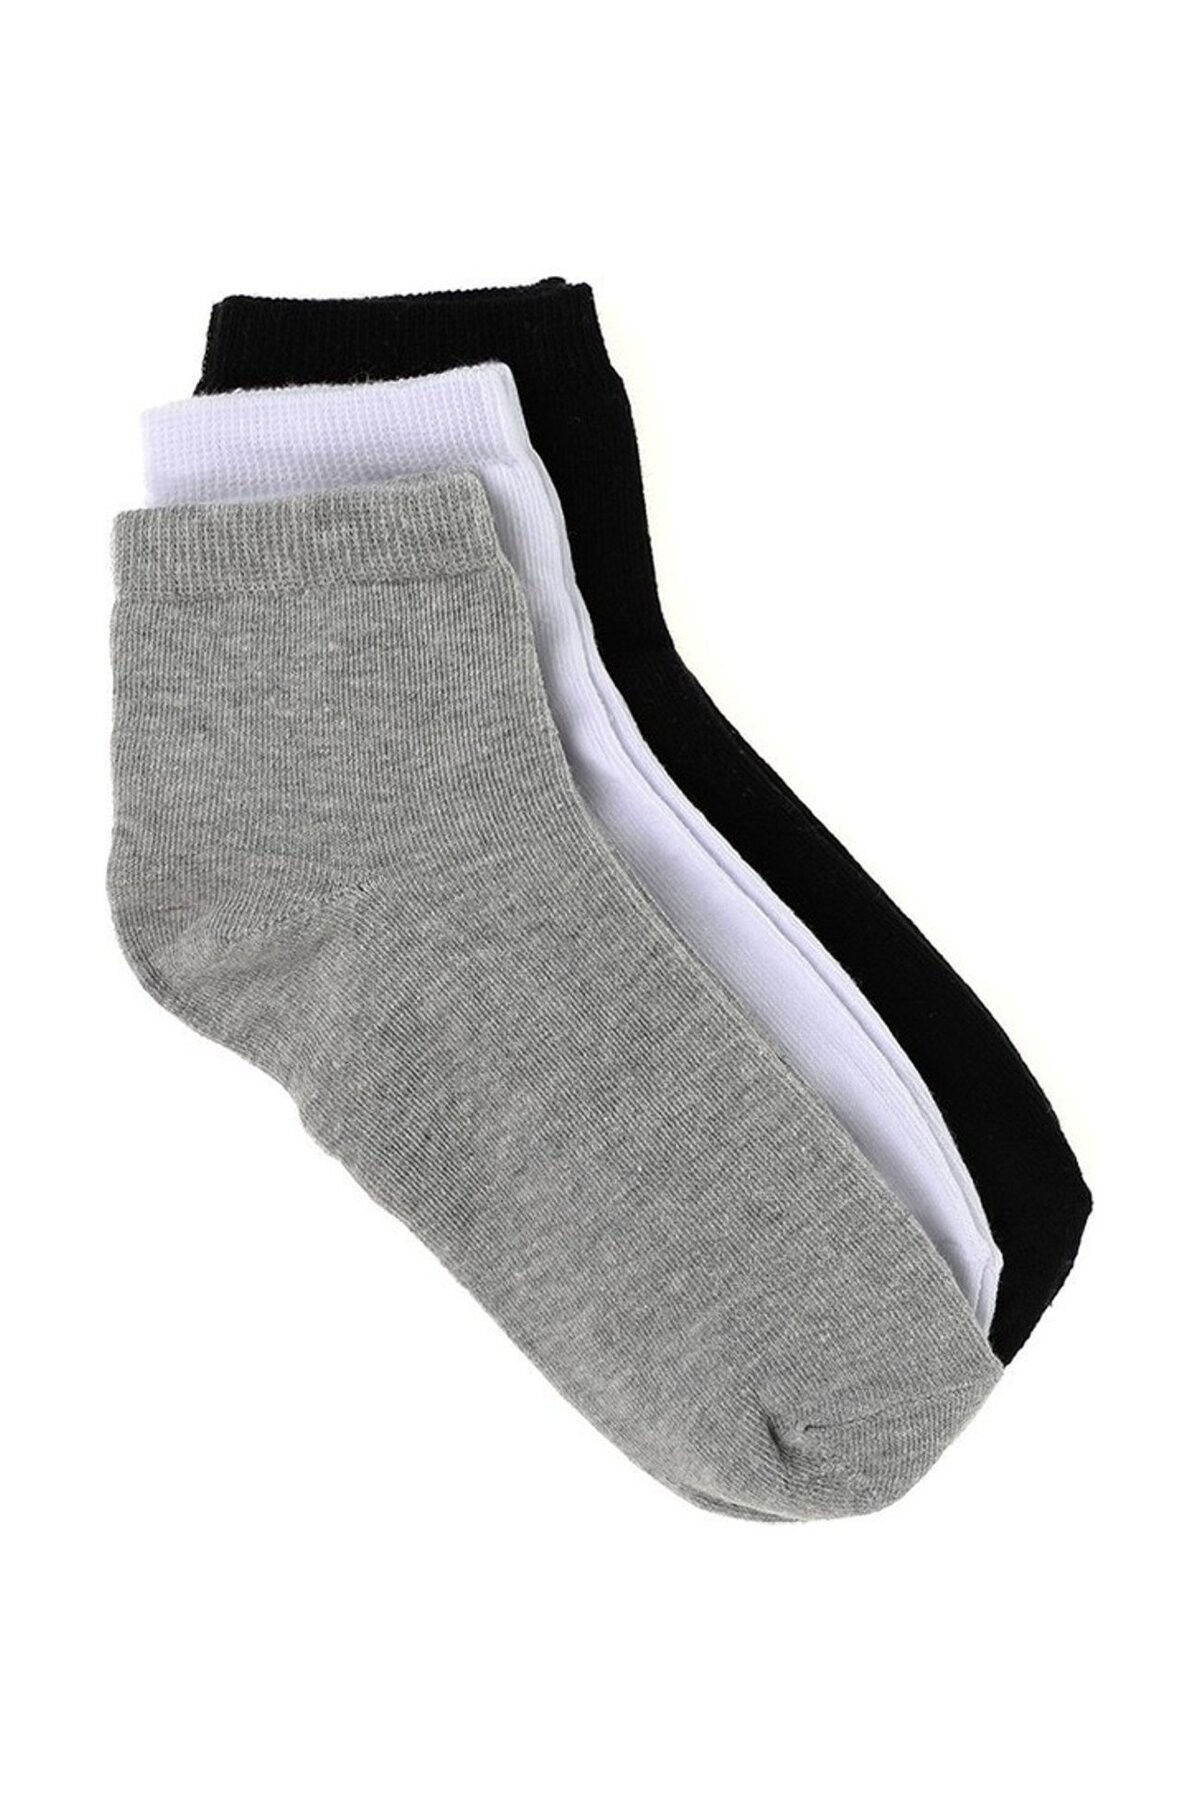 Erkek Patik Çorap 2'li paket